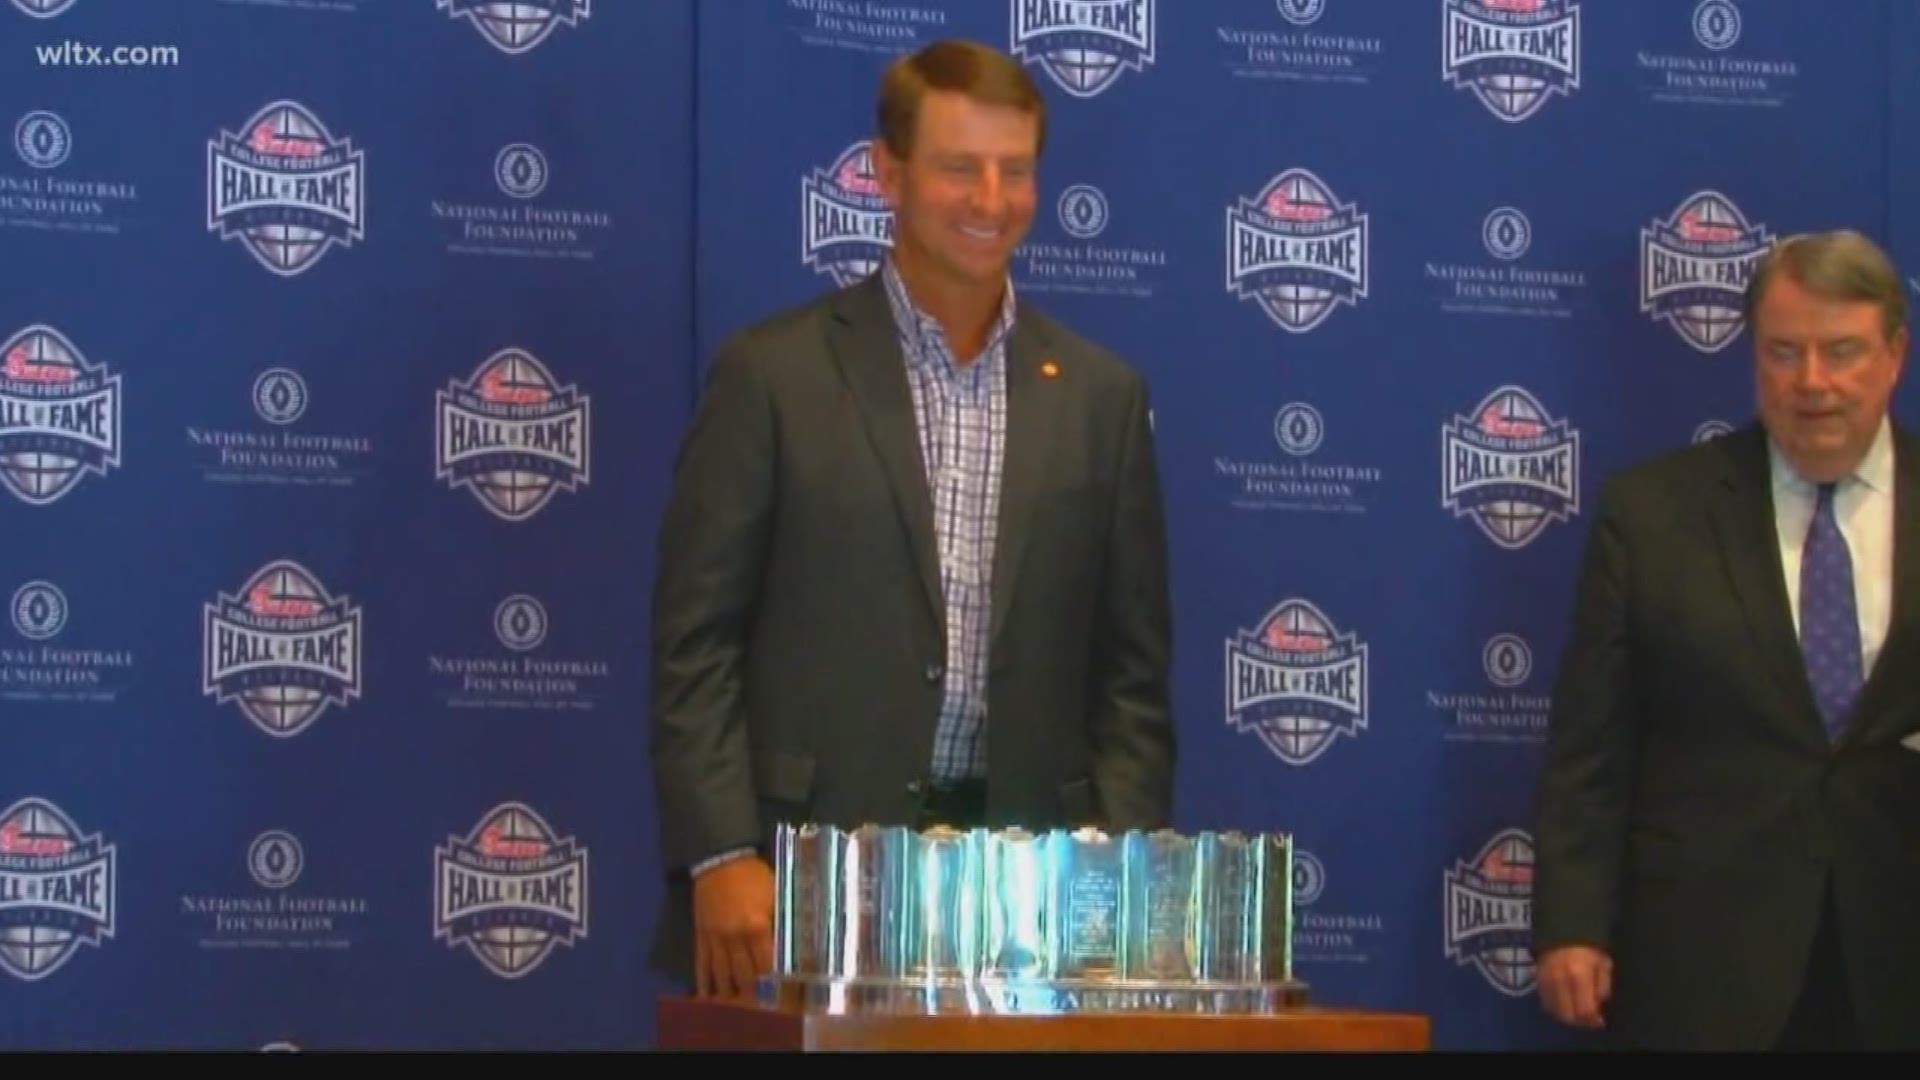 Clemson head football coach Dabo Swinney was formally presented with the MacArthur Bowl, a prestigious award from the National Football Foundation.